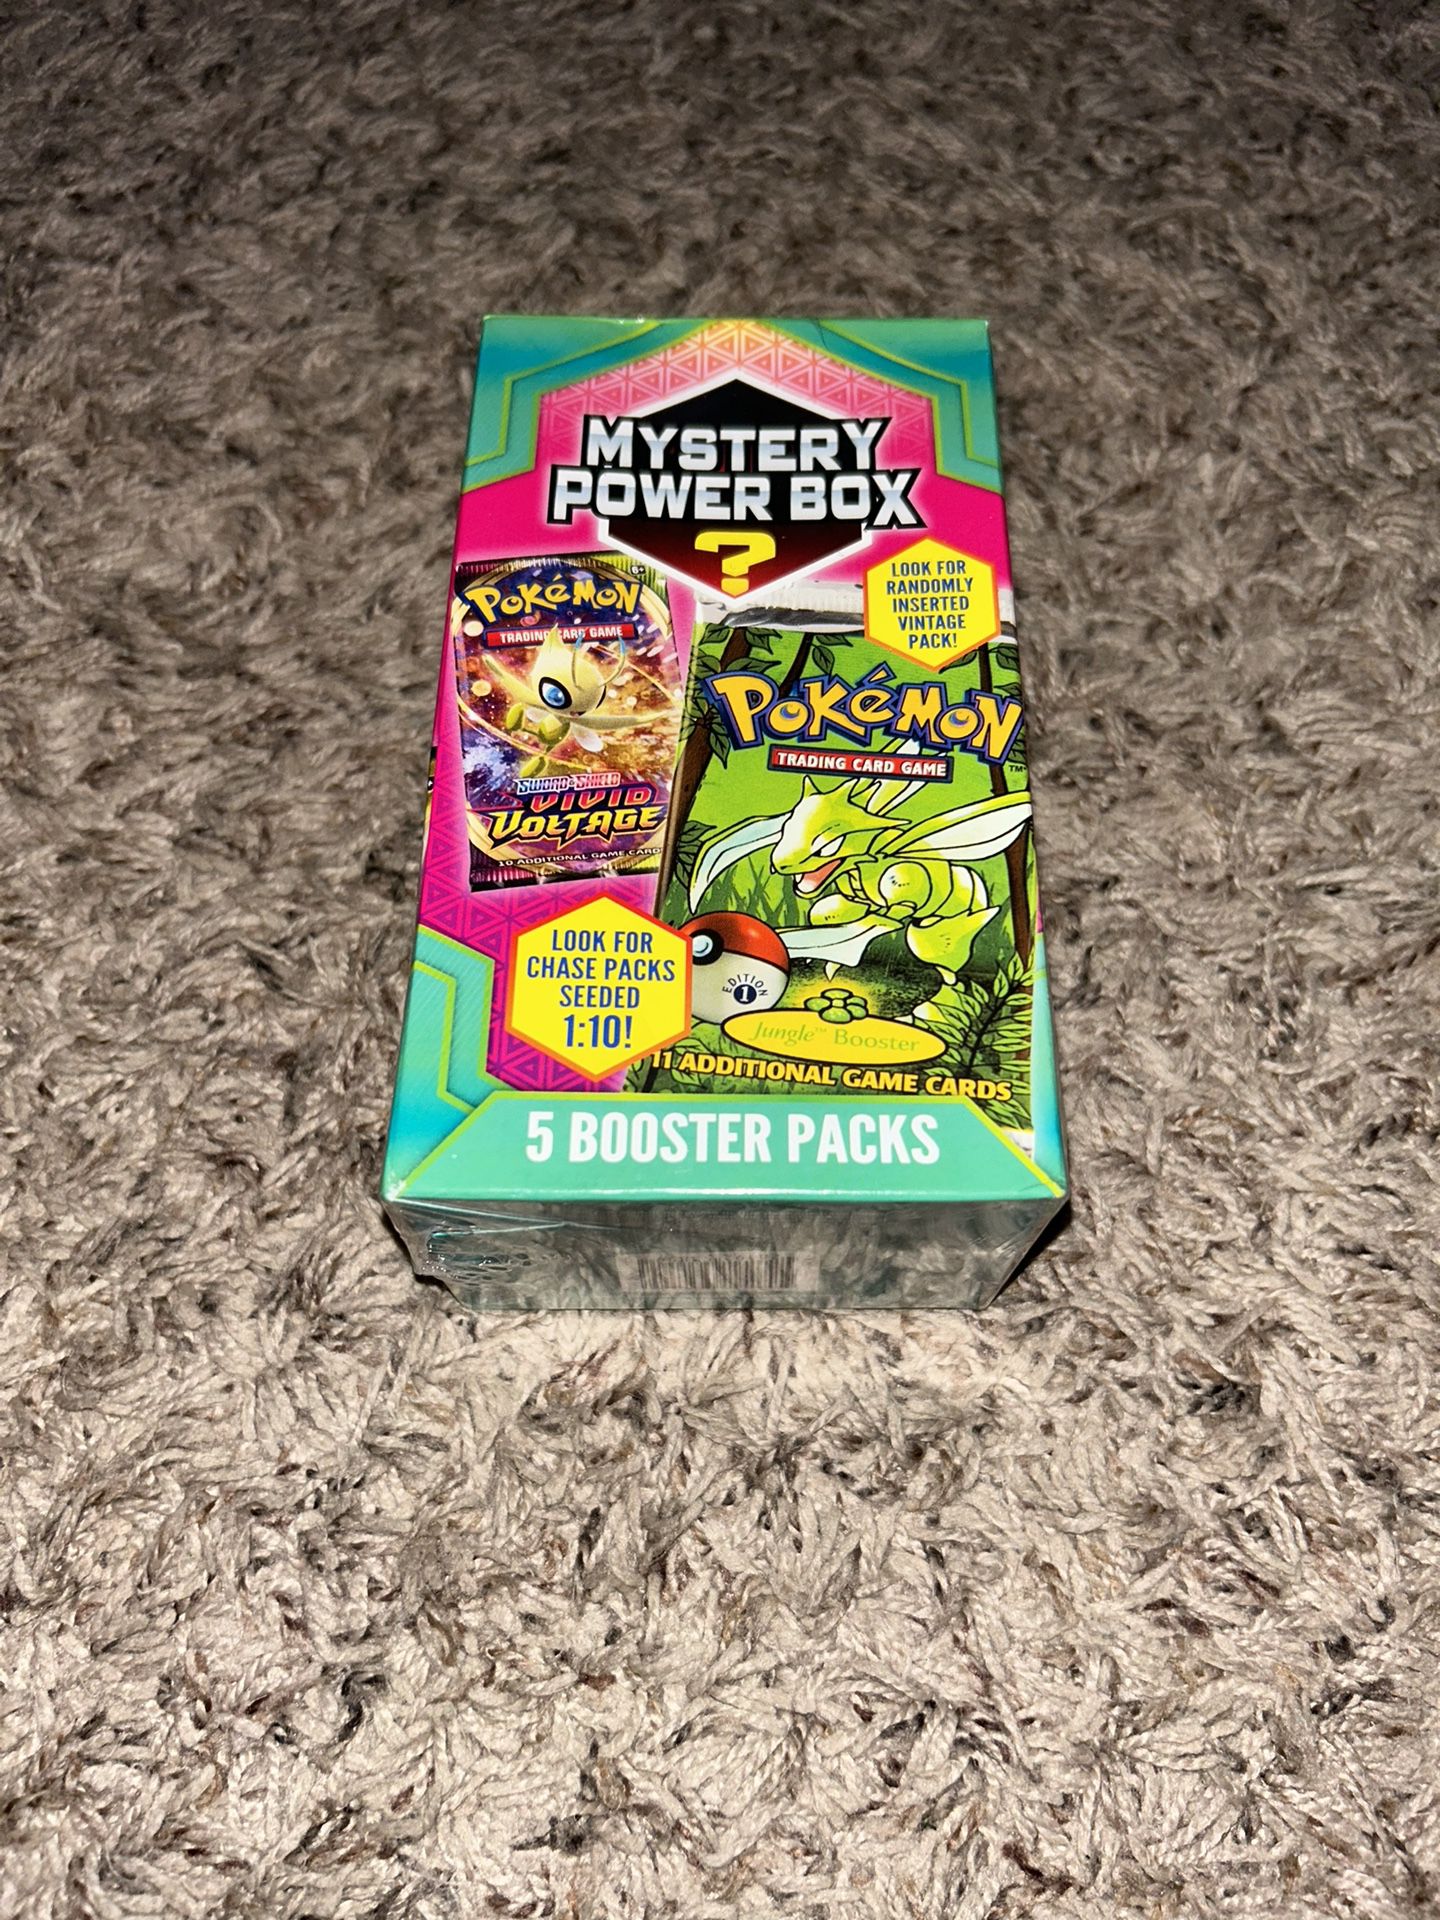 Pokémon Mystery Blaster Box